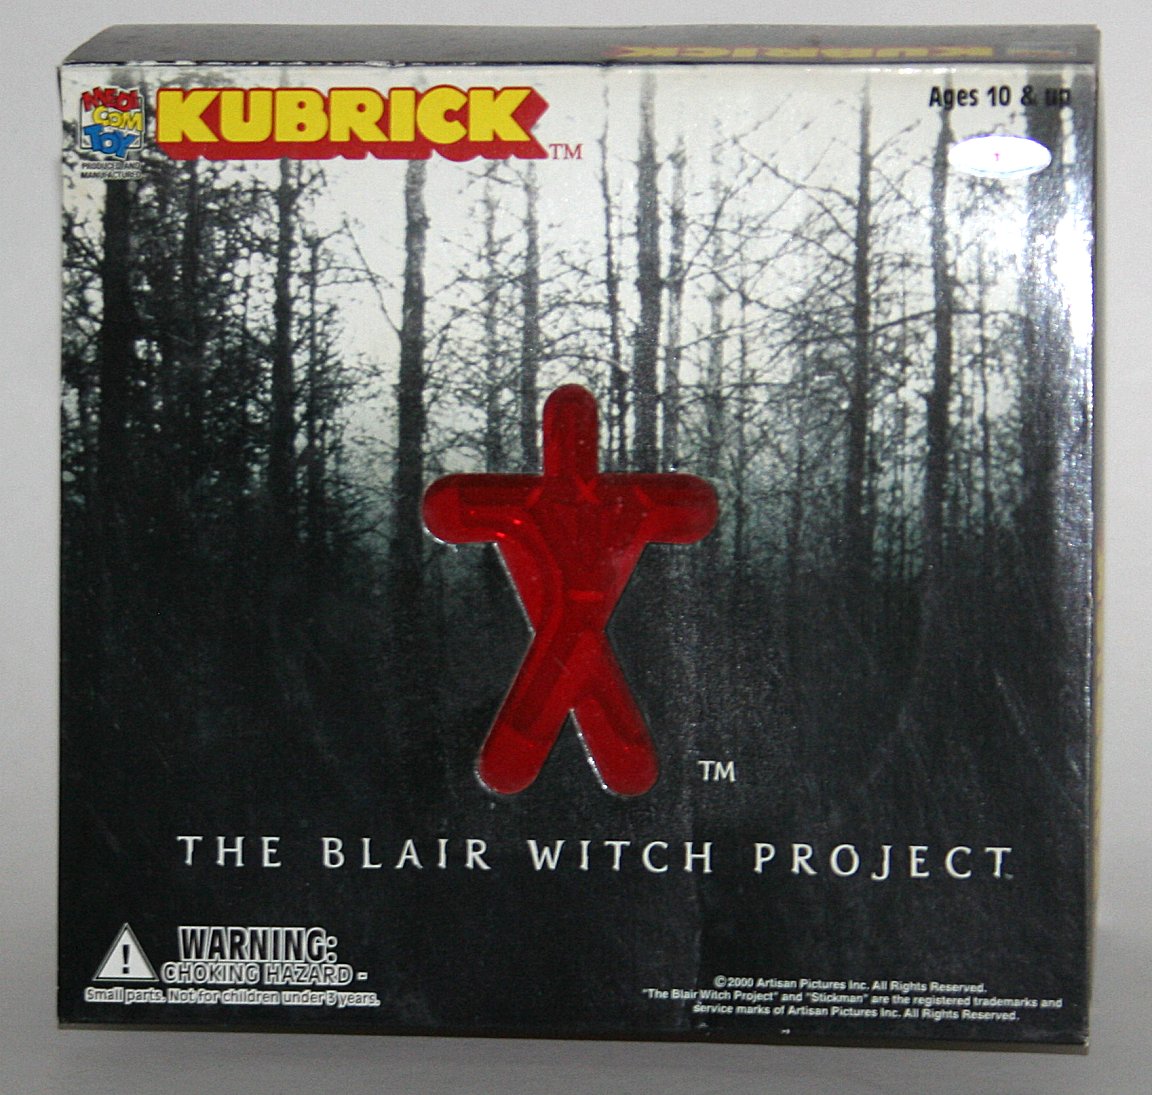 the blairwitch project Medicom kubrick 